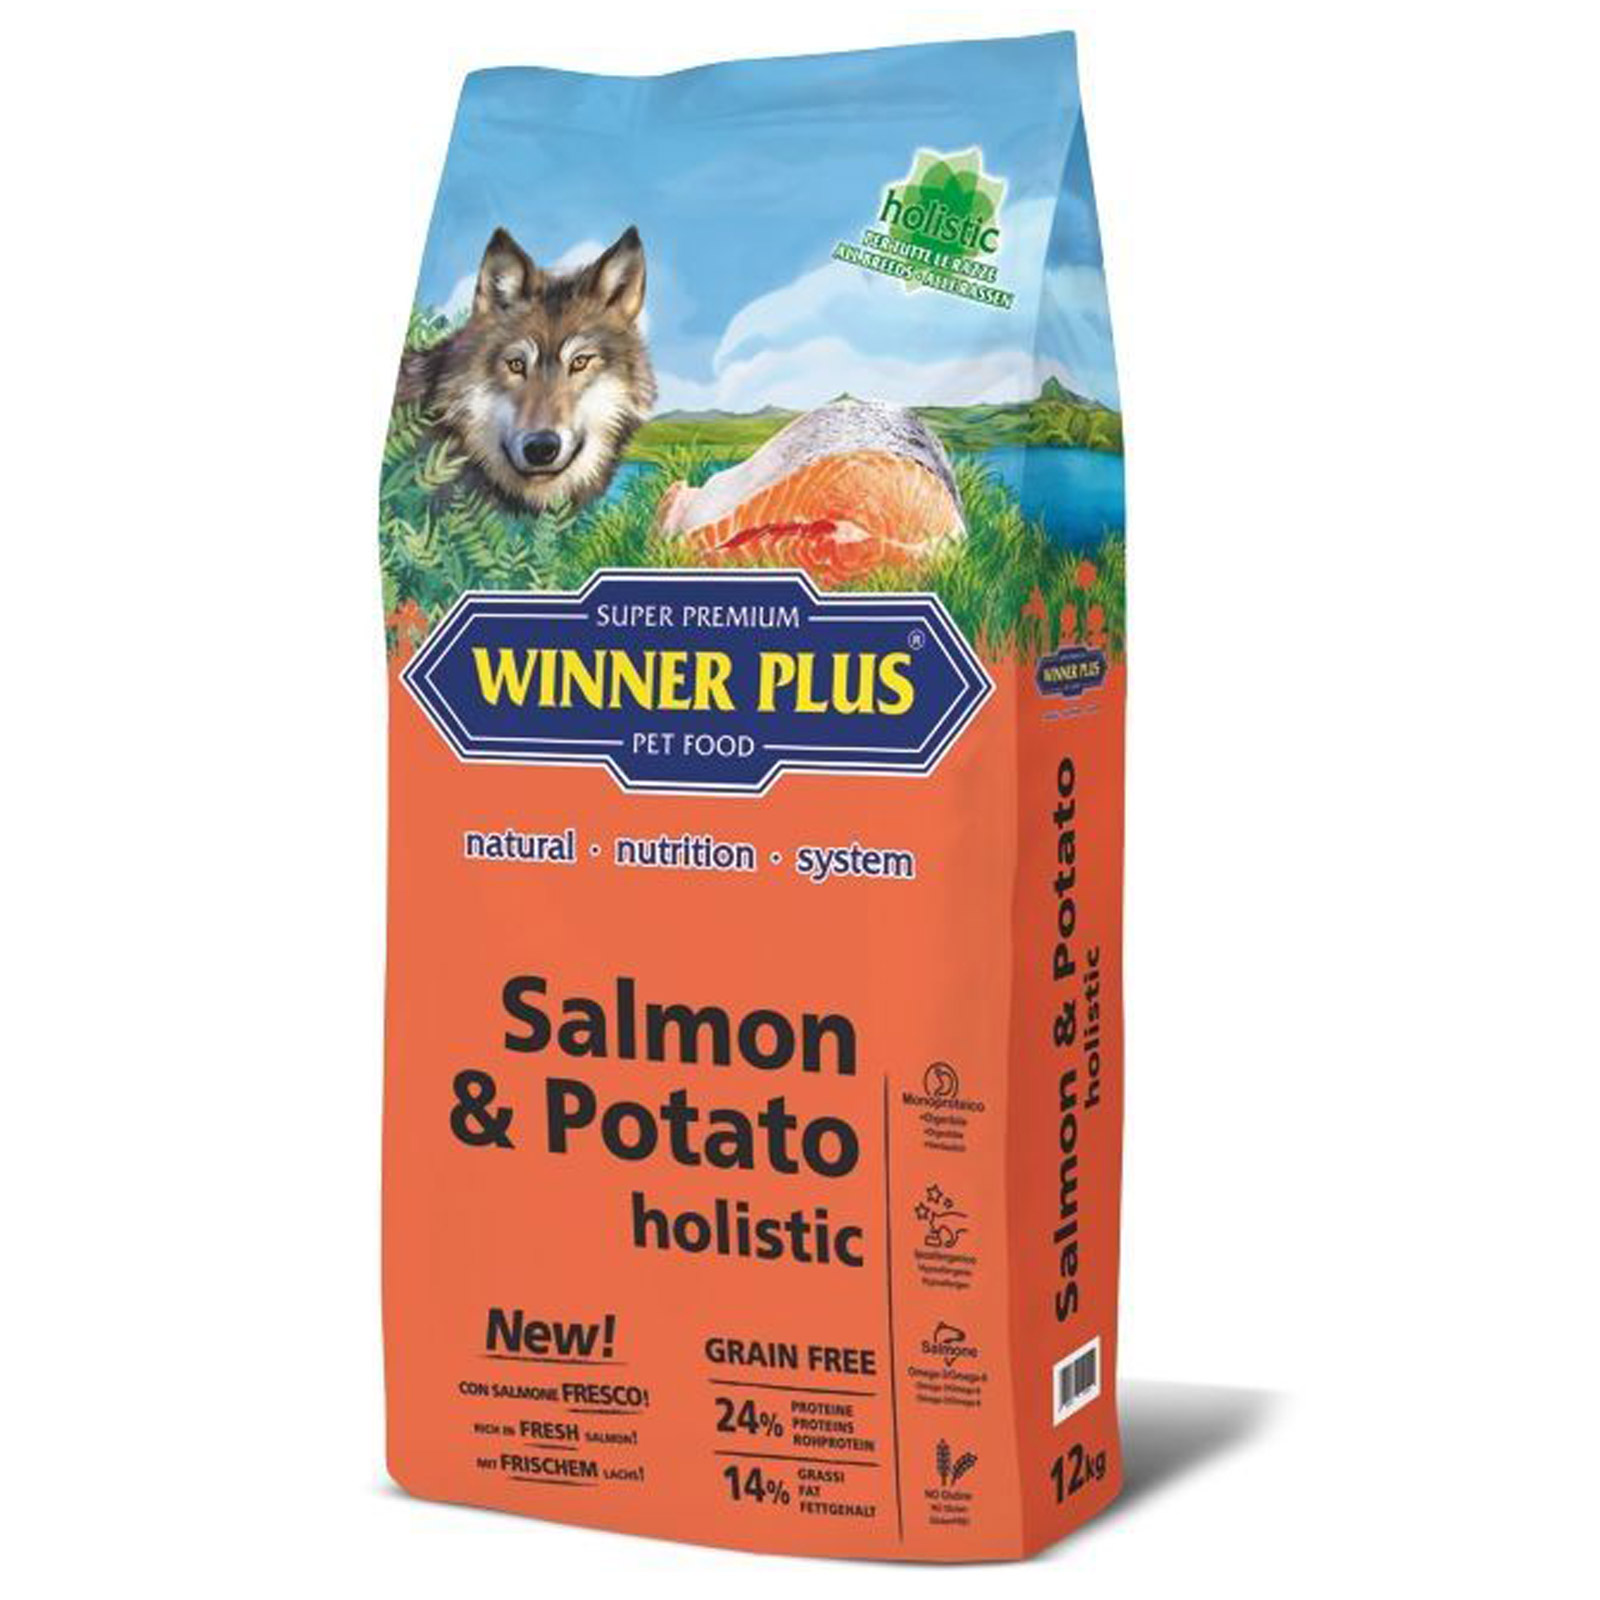 Winner Plus Holistic Salmon & Potato